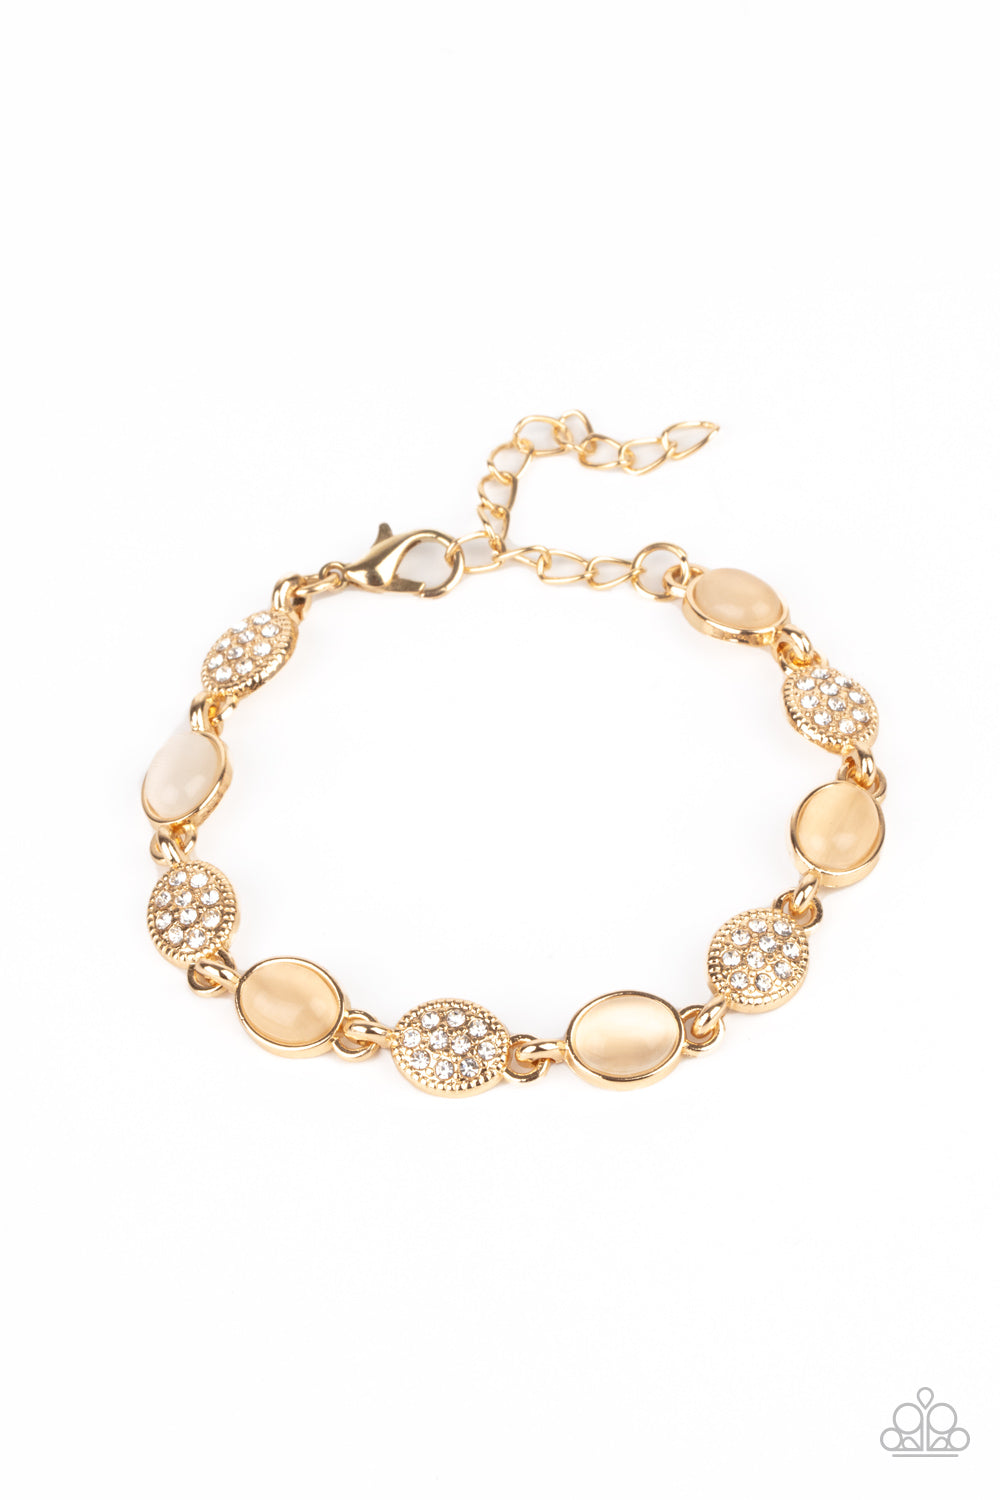 Stop and GLOW - Gold Bracelet - Princess Glam Shop